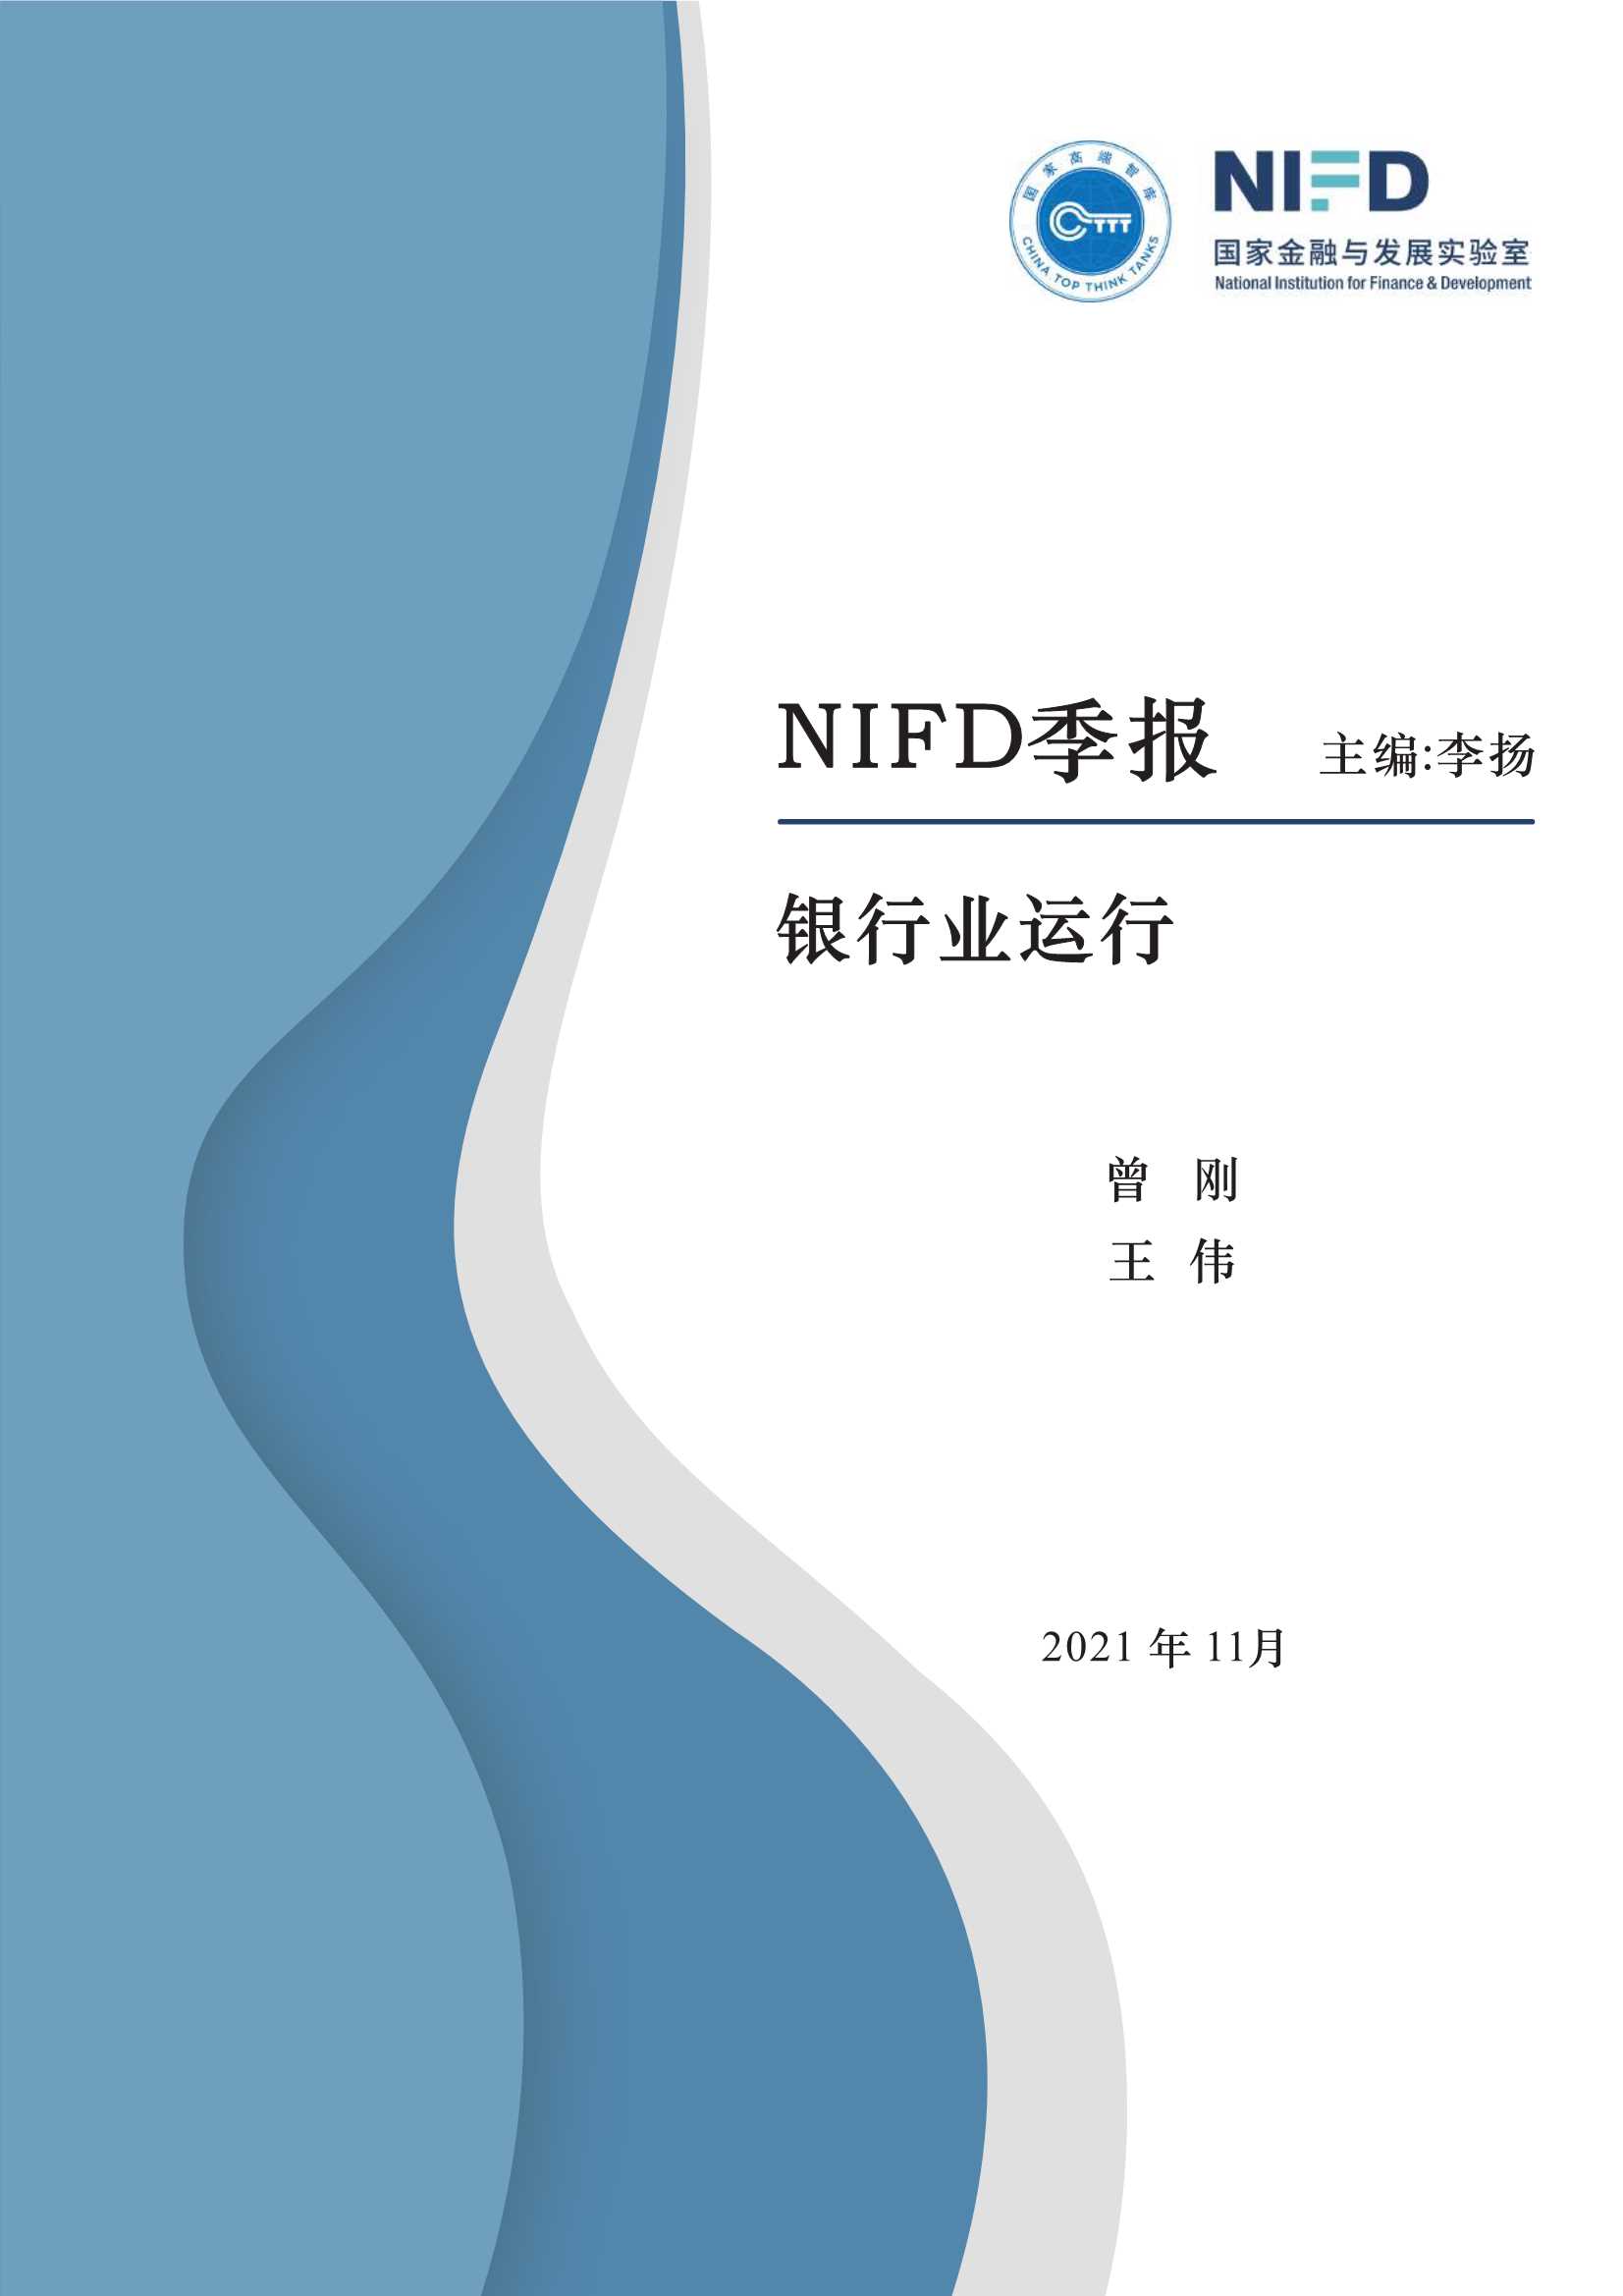 NIFD-2021Q3银行业运行-2021.12-19页